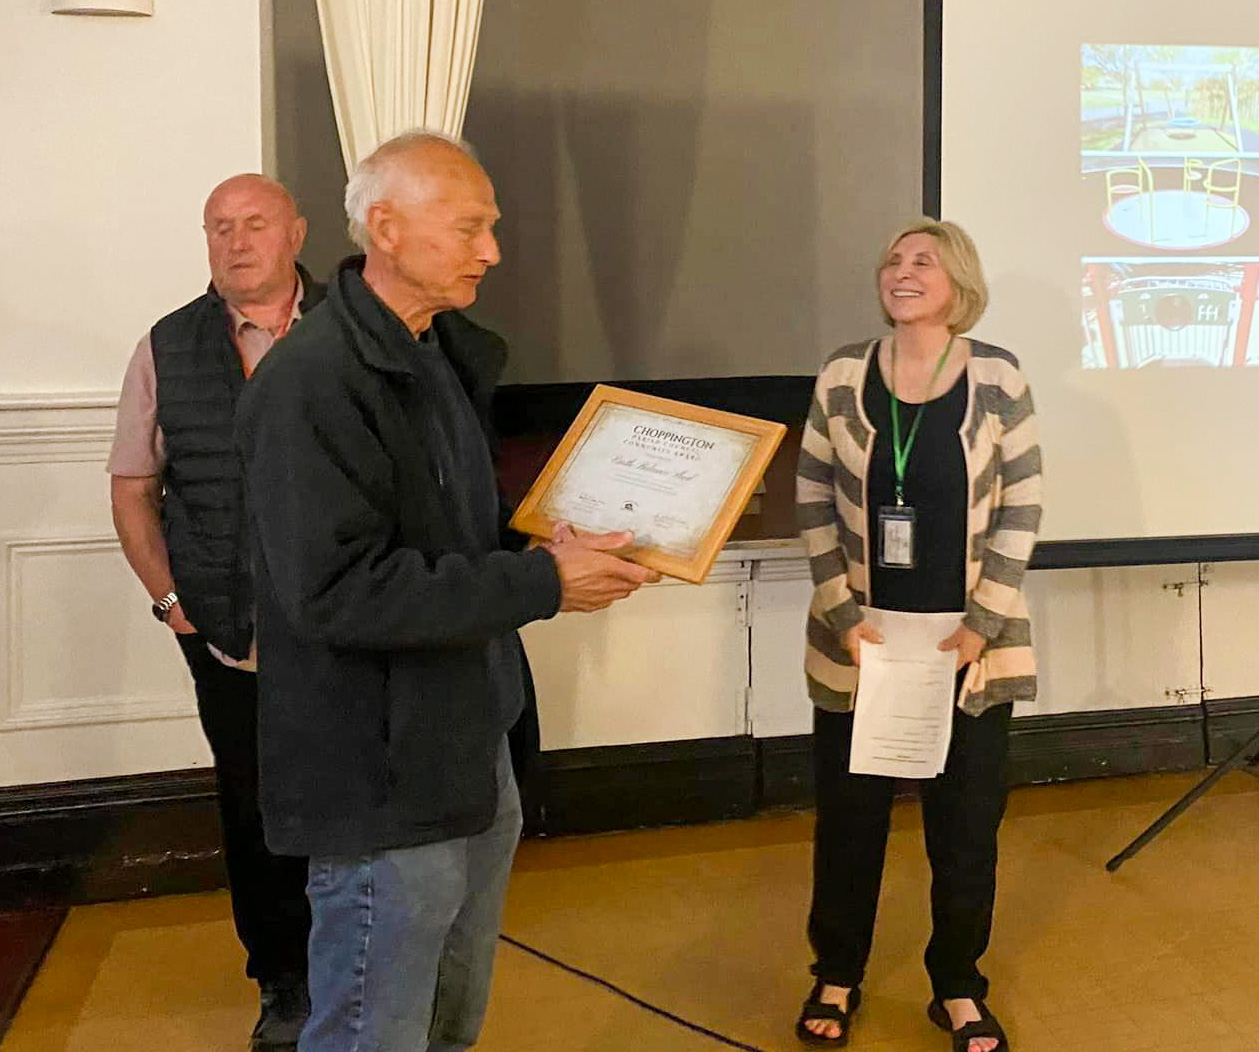 Brian receiving ParishCouncil Award